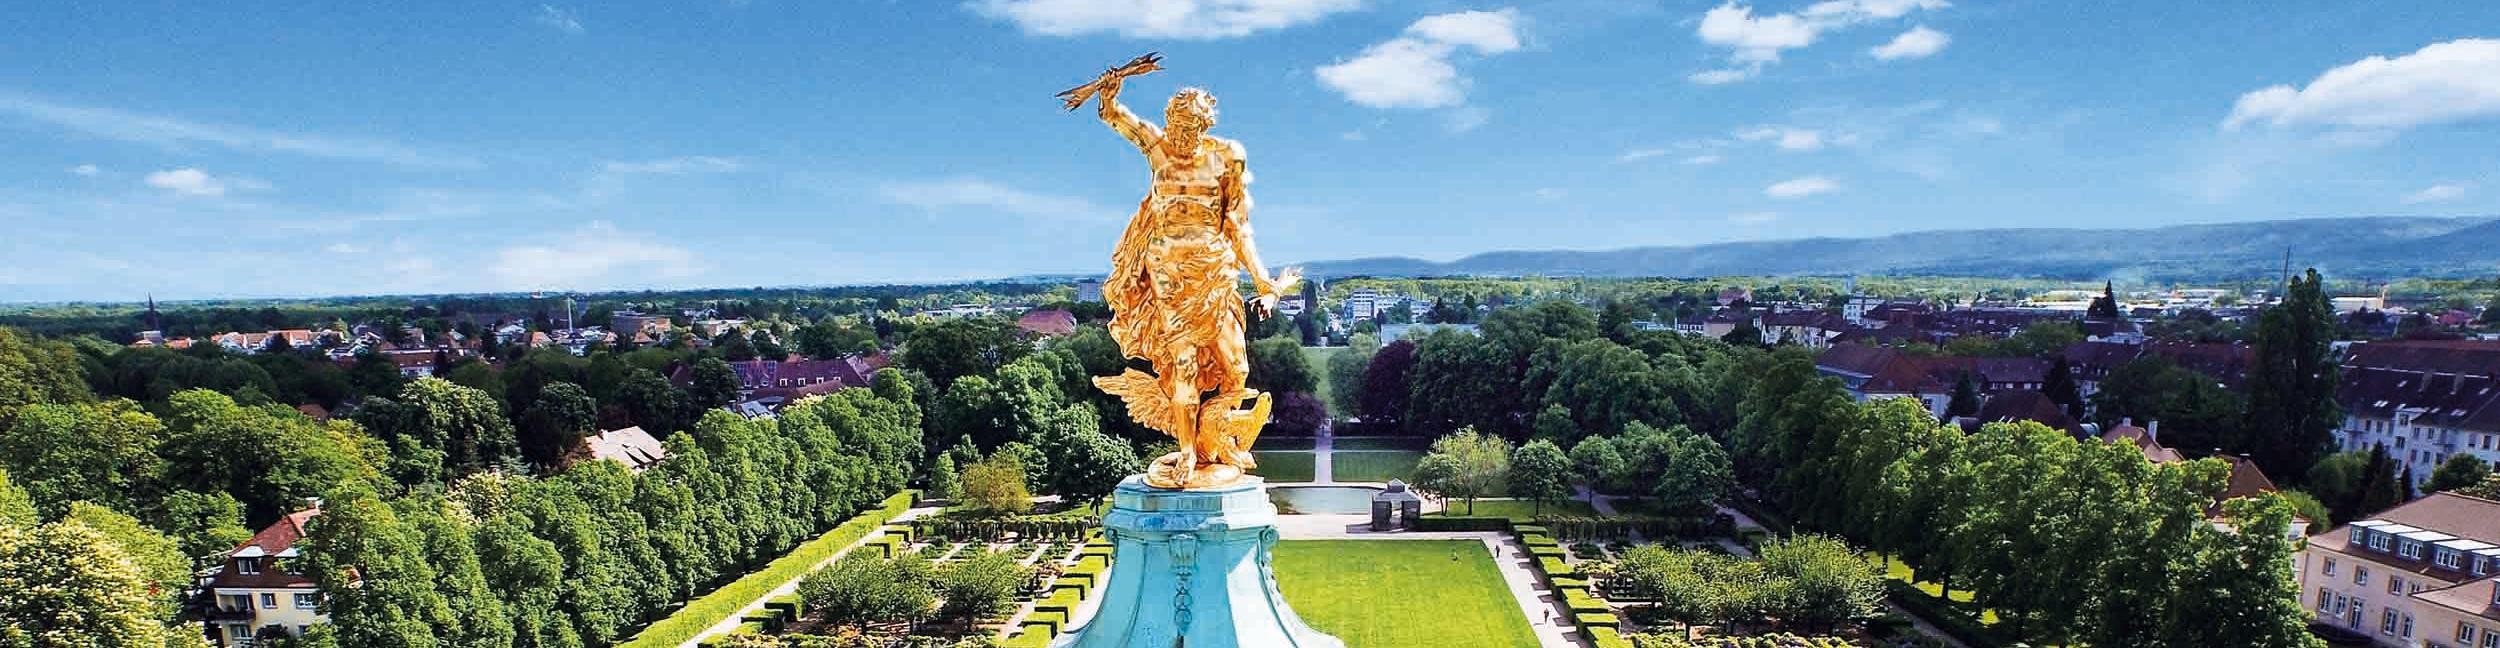 L'homme en or au château de Rastatt